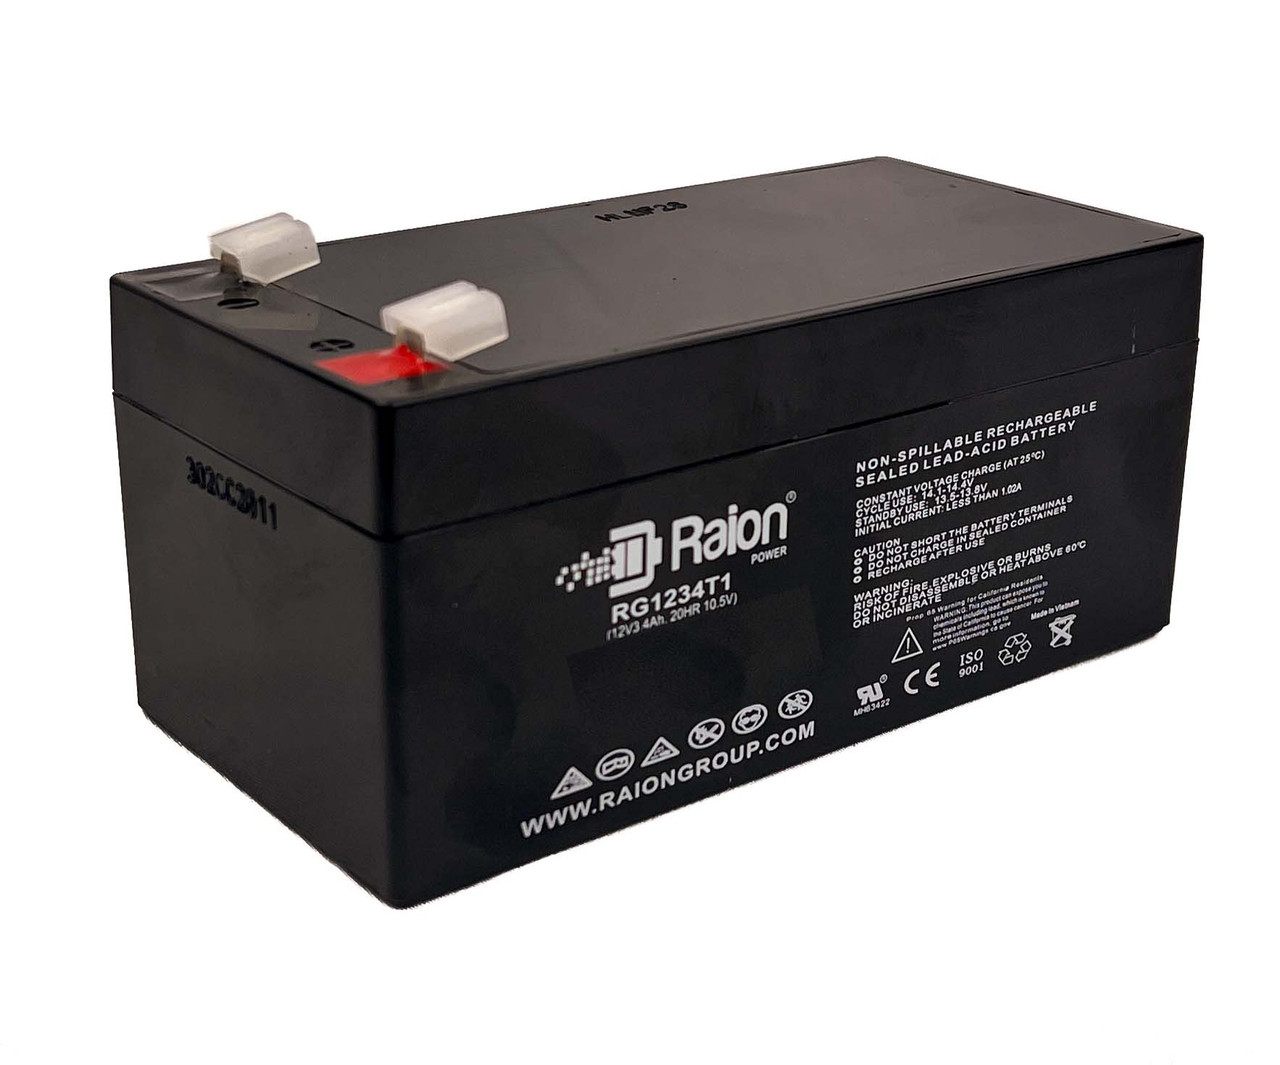 Raion Power 12V 3.4Ah Replacement Emergency Light Battery for IBT BT3.4-12